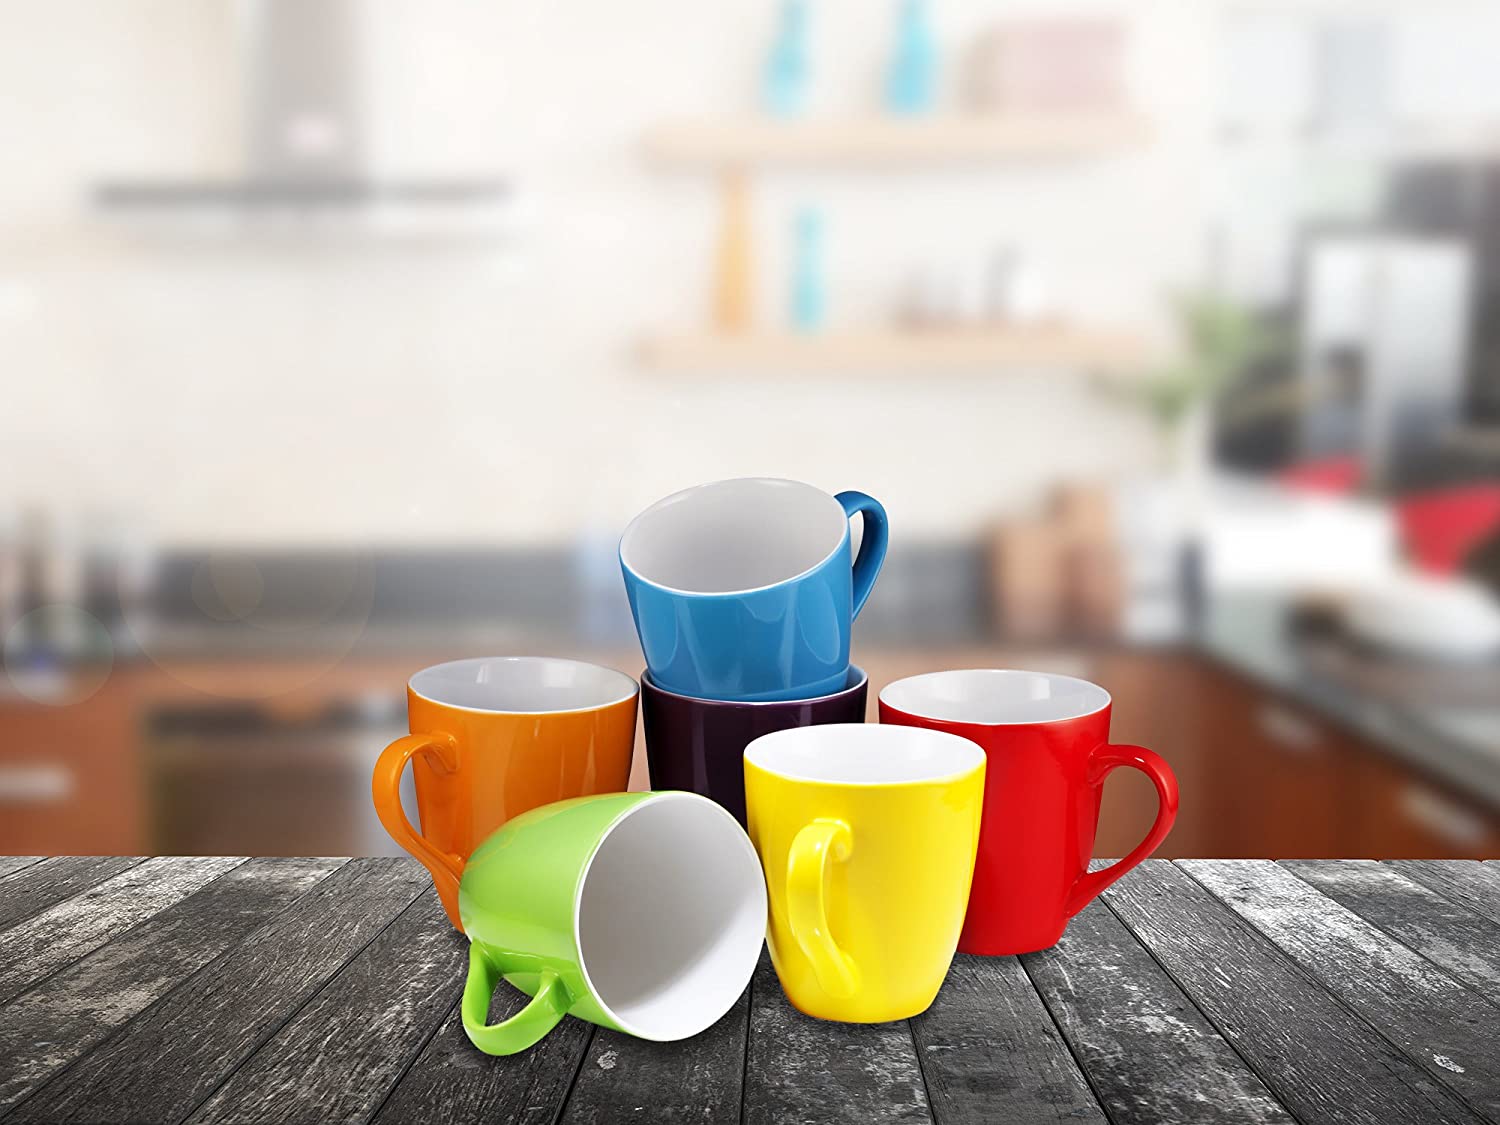 Coffee Mug Set Set of 6 Large-Sized 16 Ounce Ceramic Coffee Mugs Restaurant Coffee Mugs by Bruntmor (Multi-Color) - e4cents